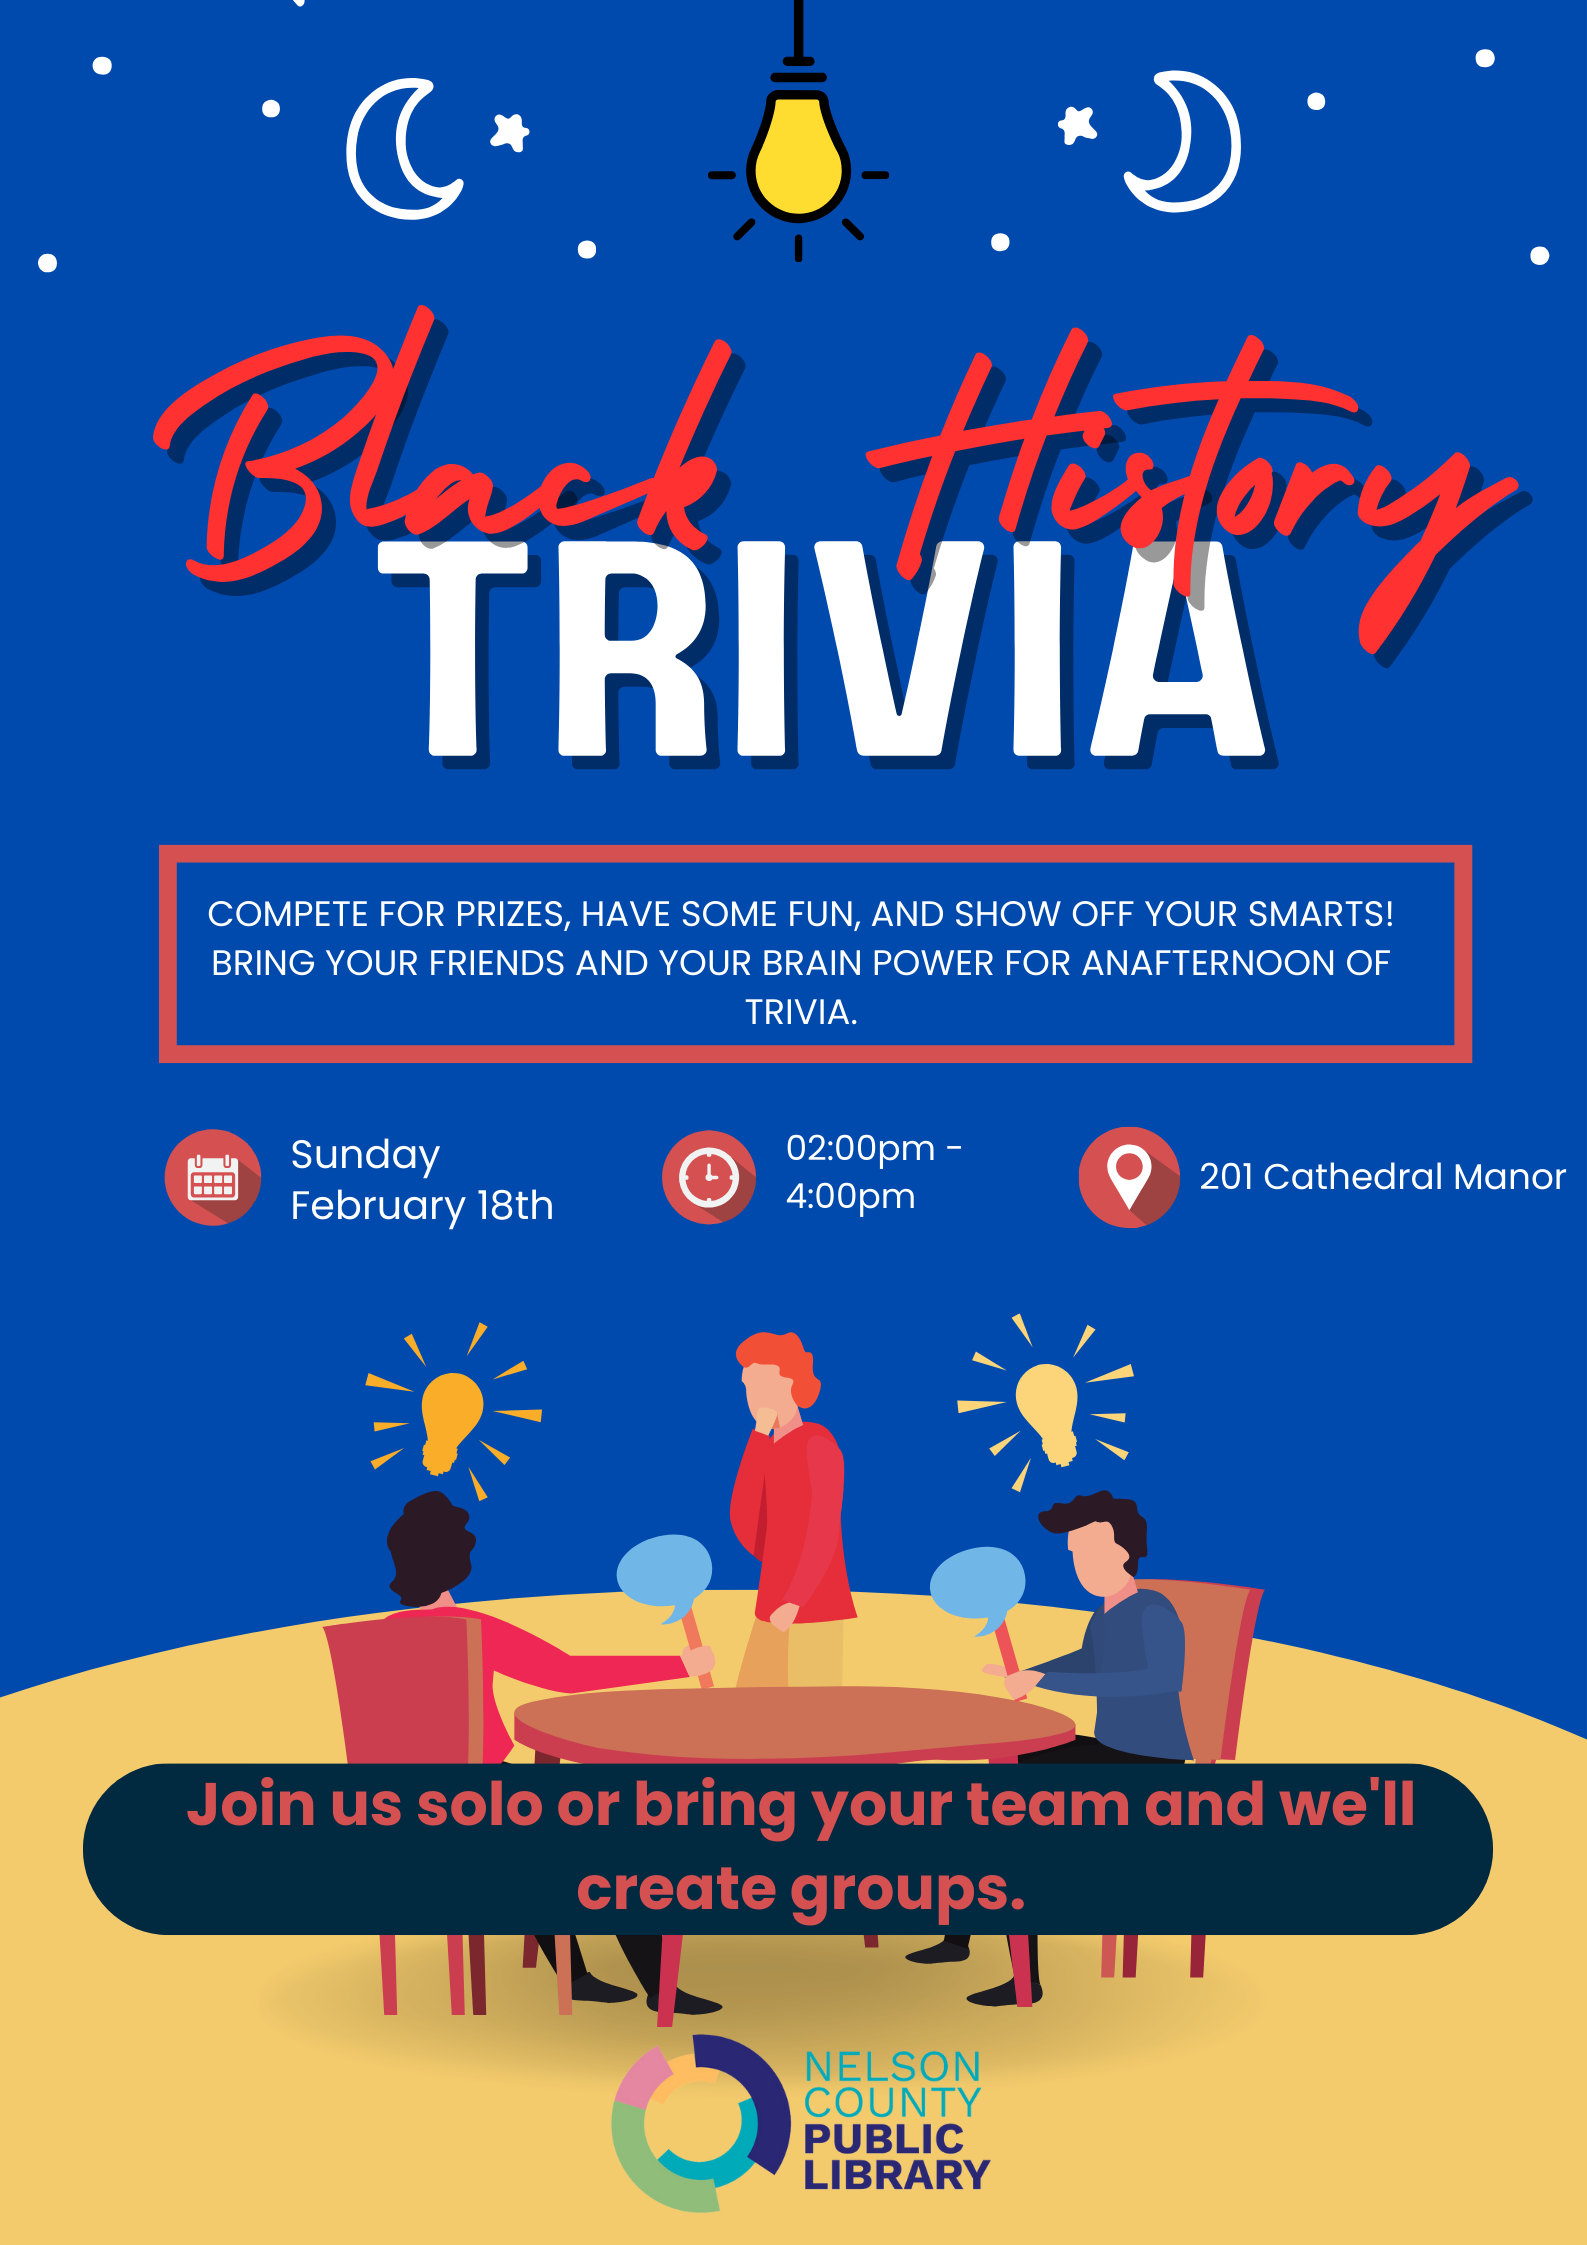 Black History Trivia and Bingo